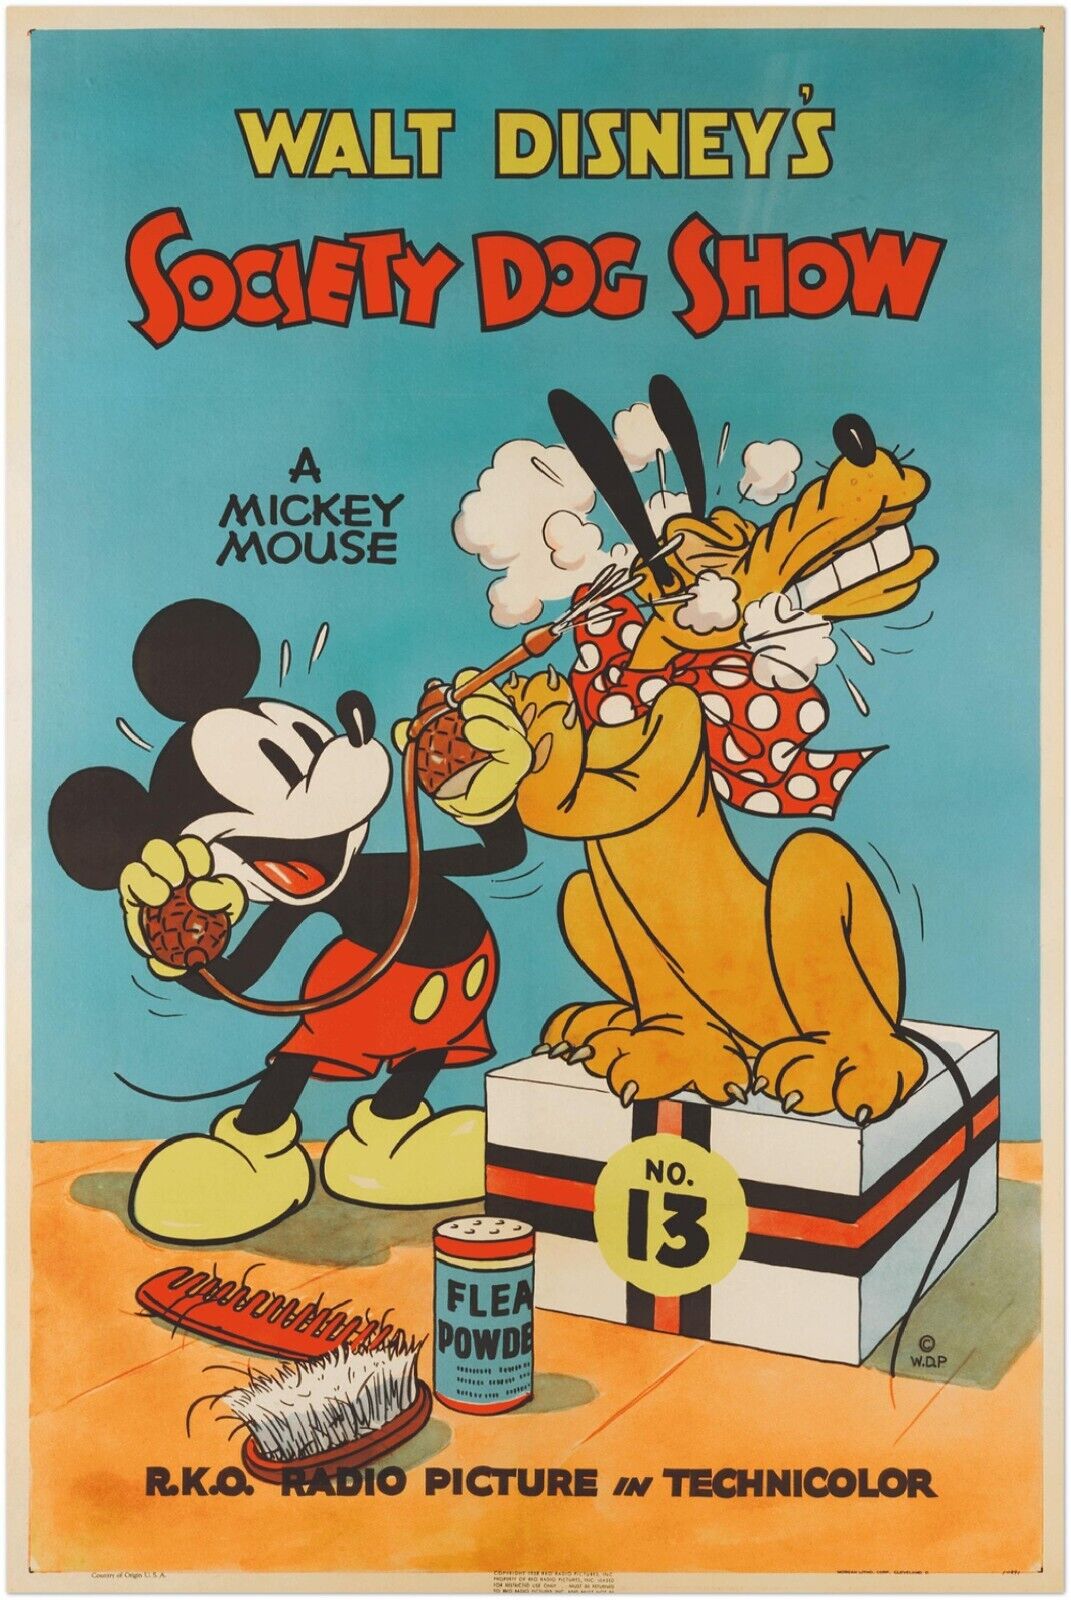 Disney Mickey Mouse Vintage Movie Poster, Society Dog Show 1939 Era